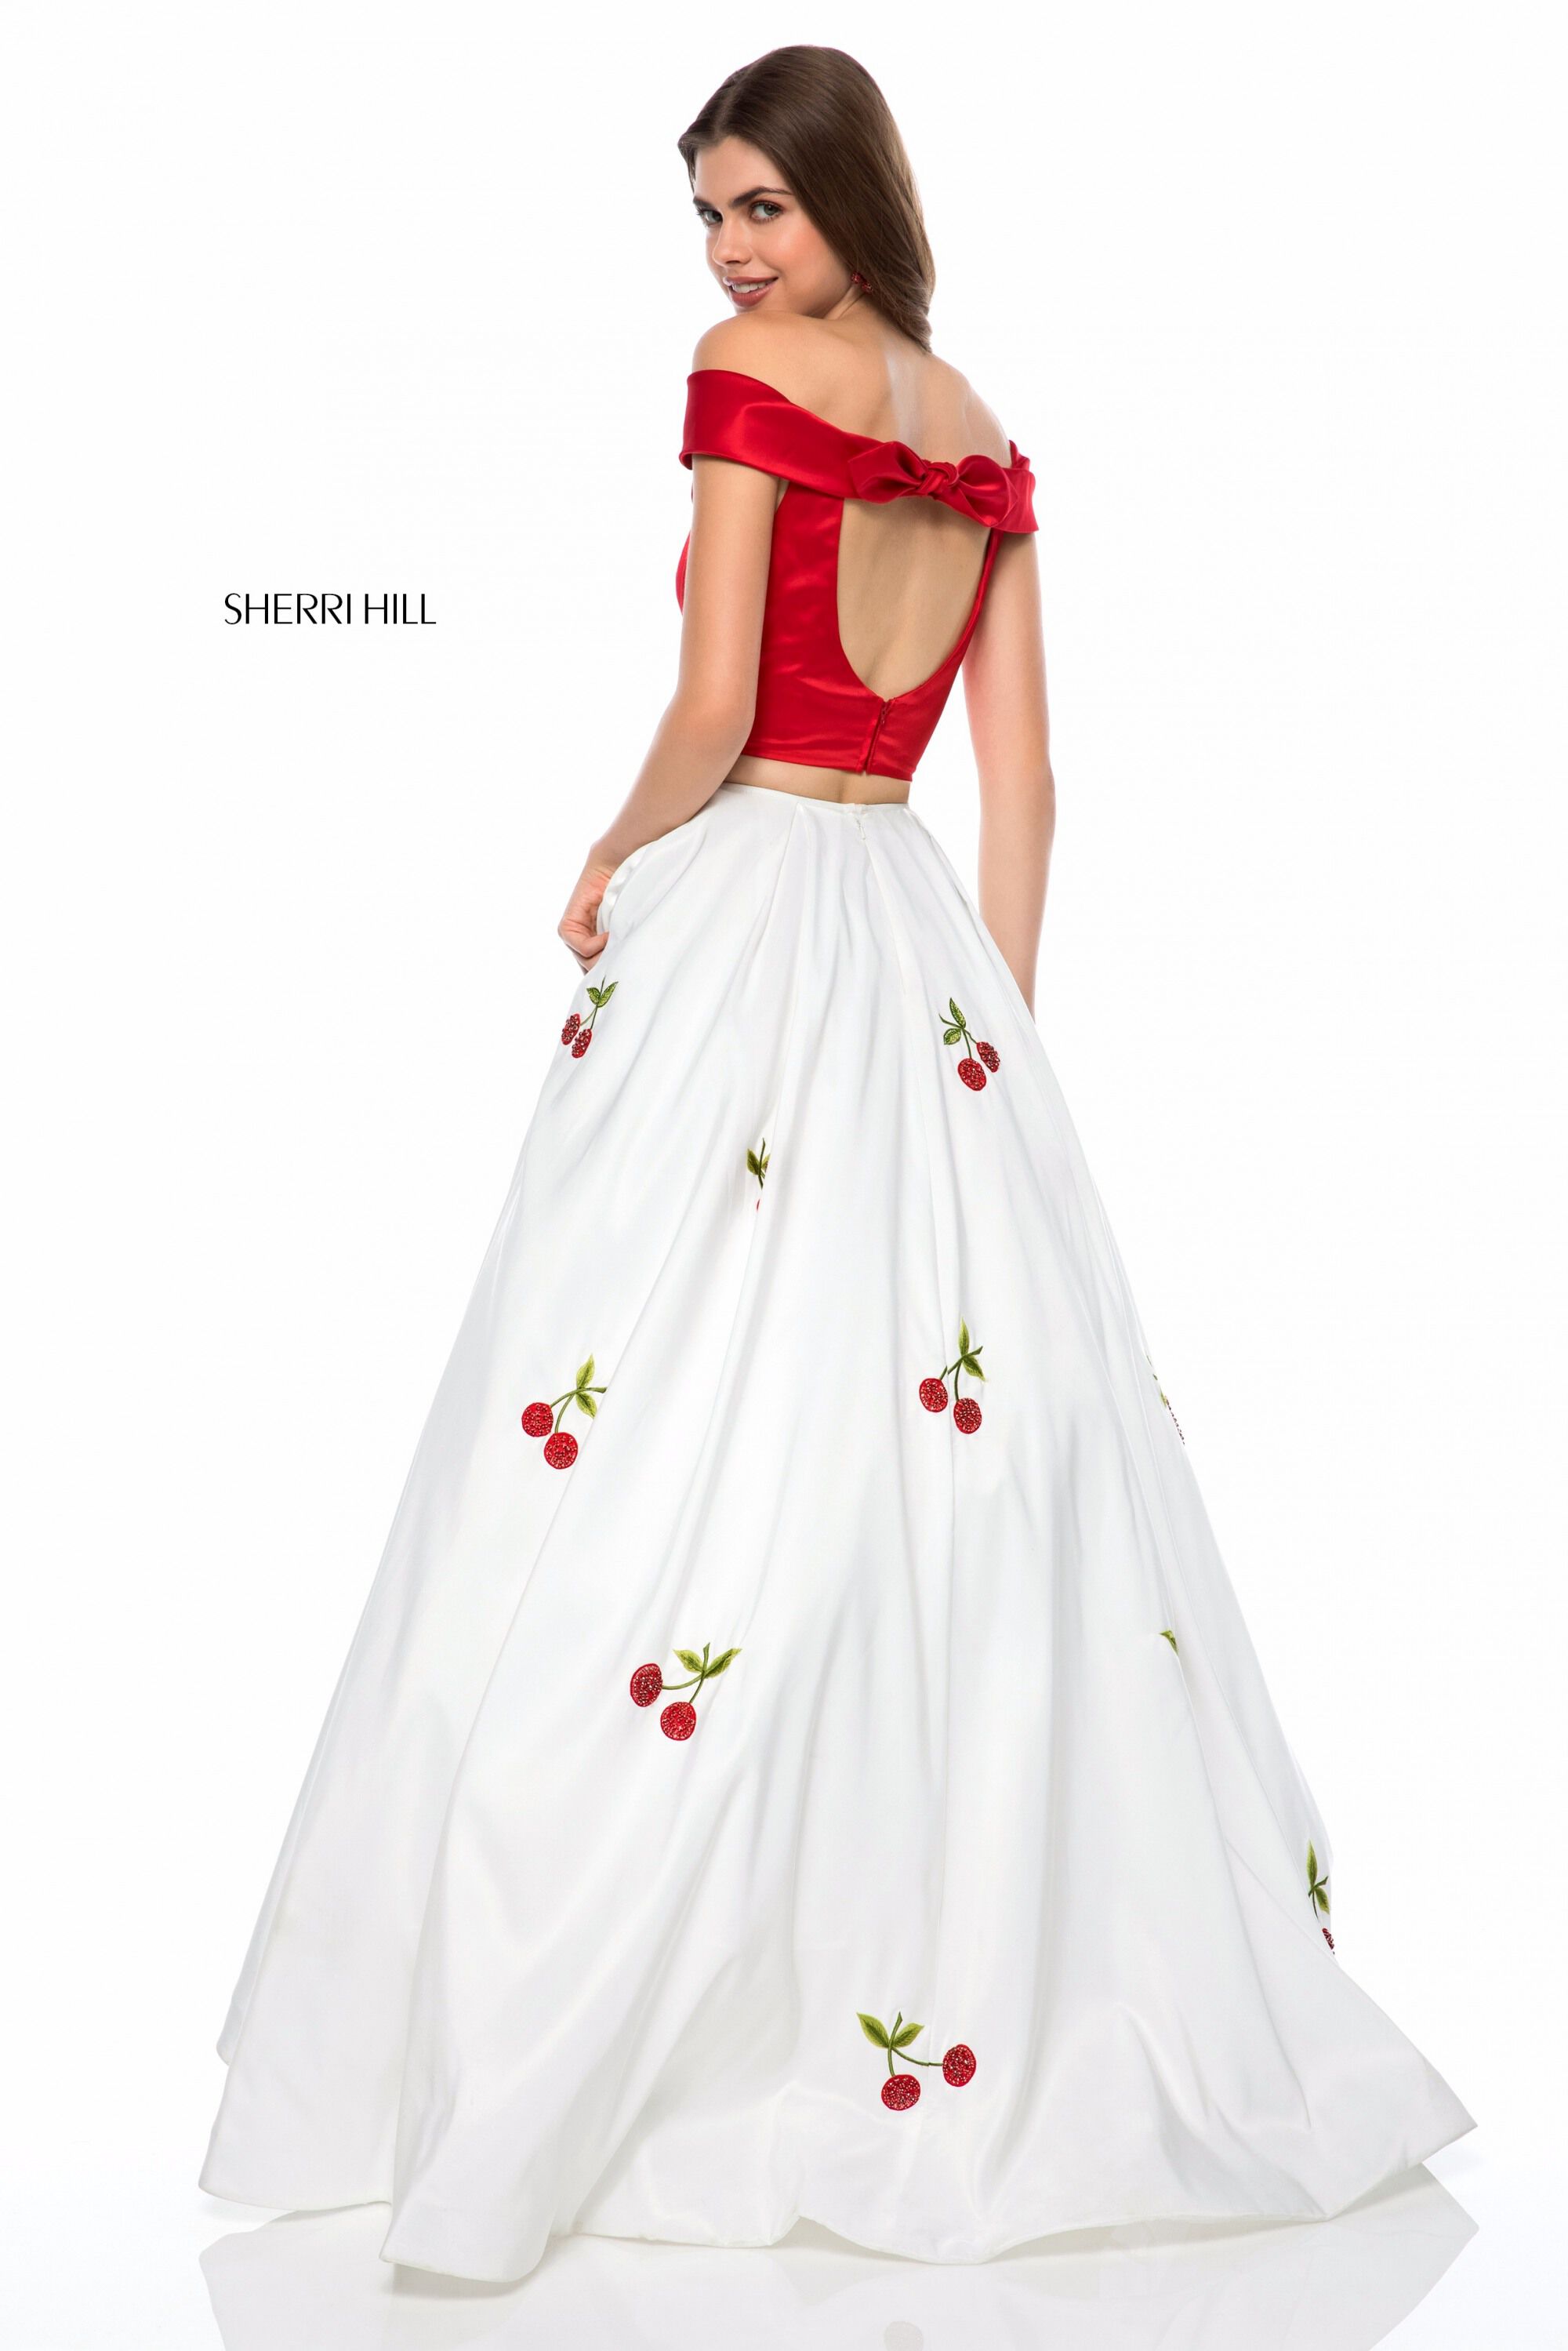 Buy dress style № 52030 designed by SherriHill